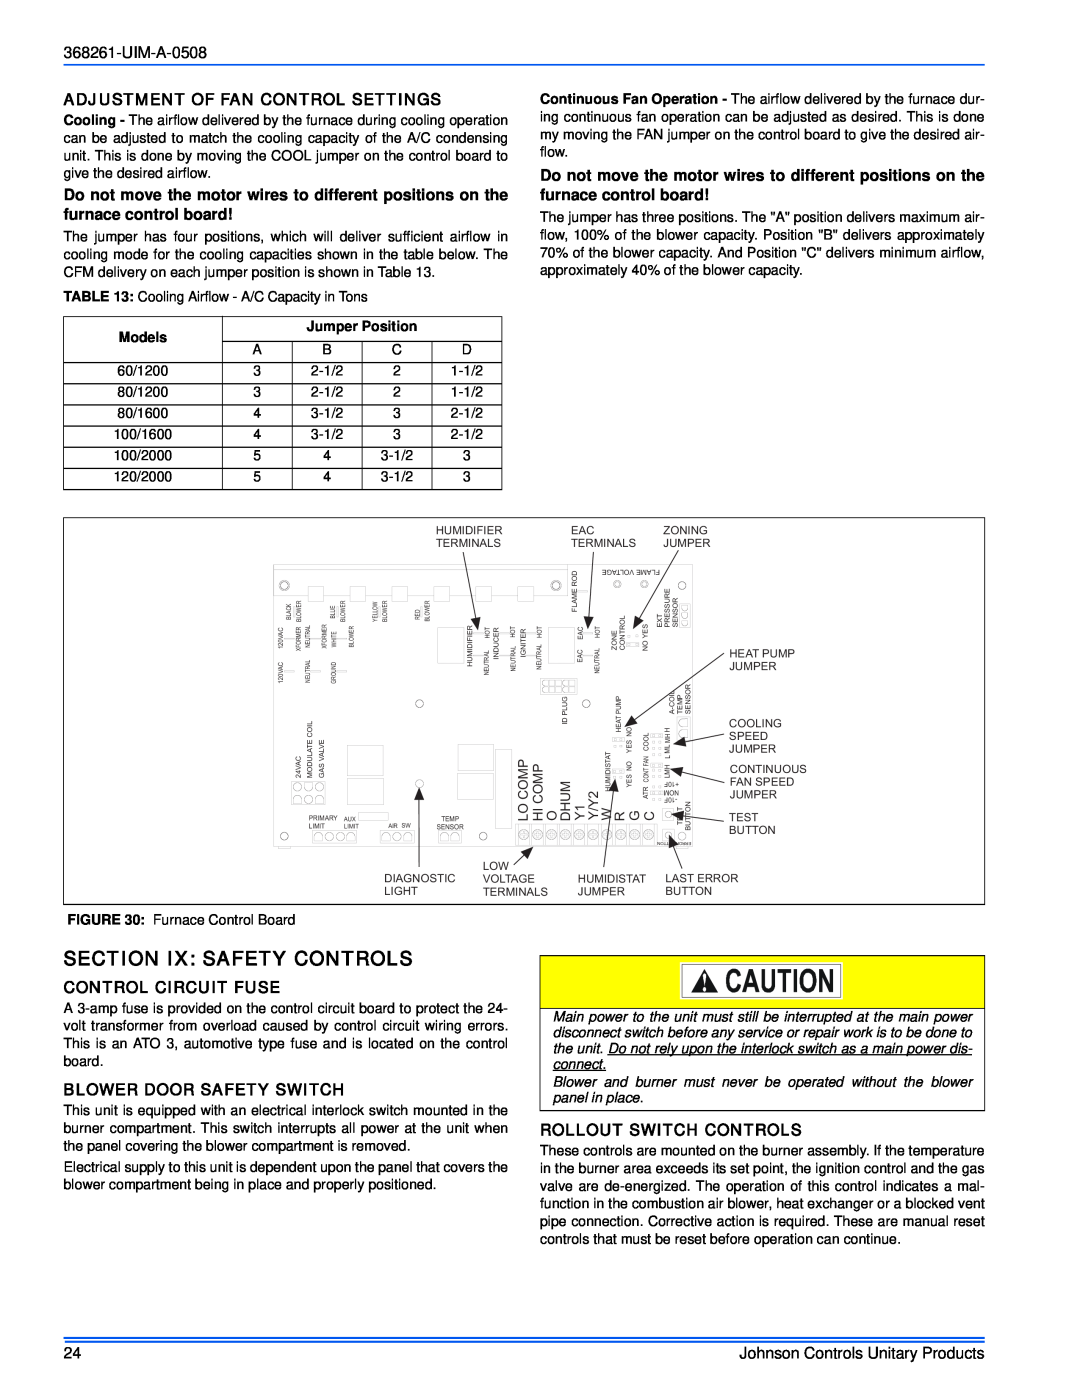 Johnson Controls YM8M/YMLM*MP Section Ix Safety Controls, Adjustment Of Fan Control Settings, Control Circuit Fuse, Models 